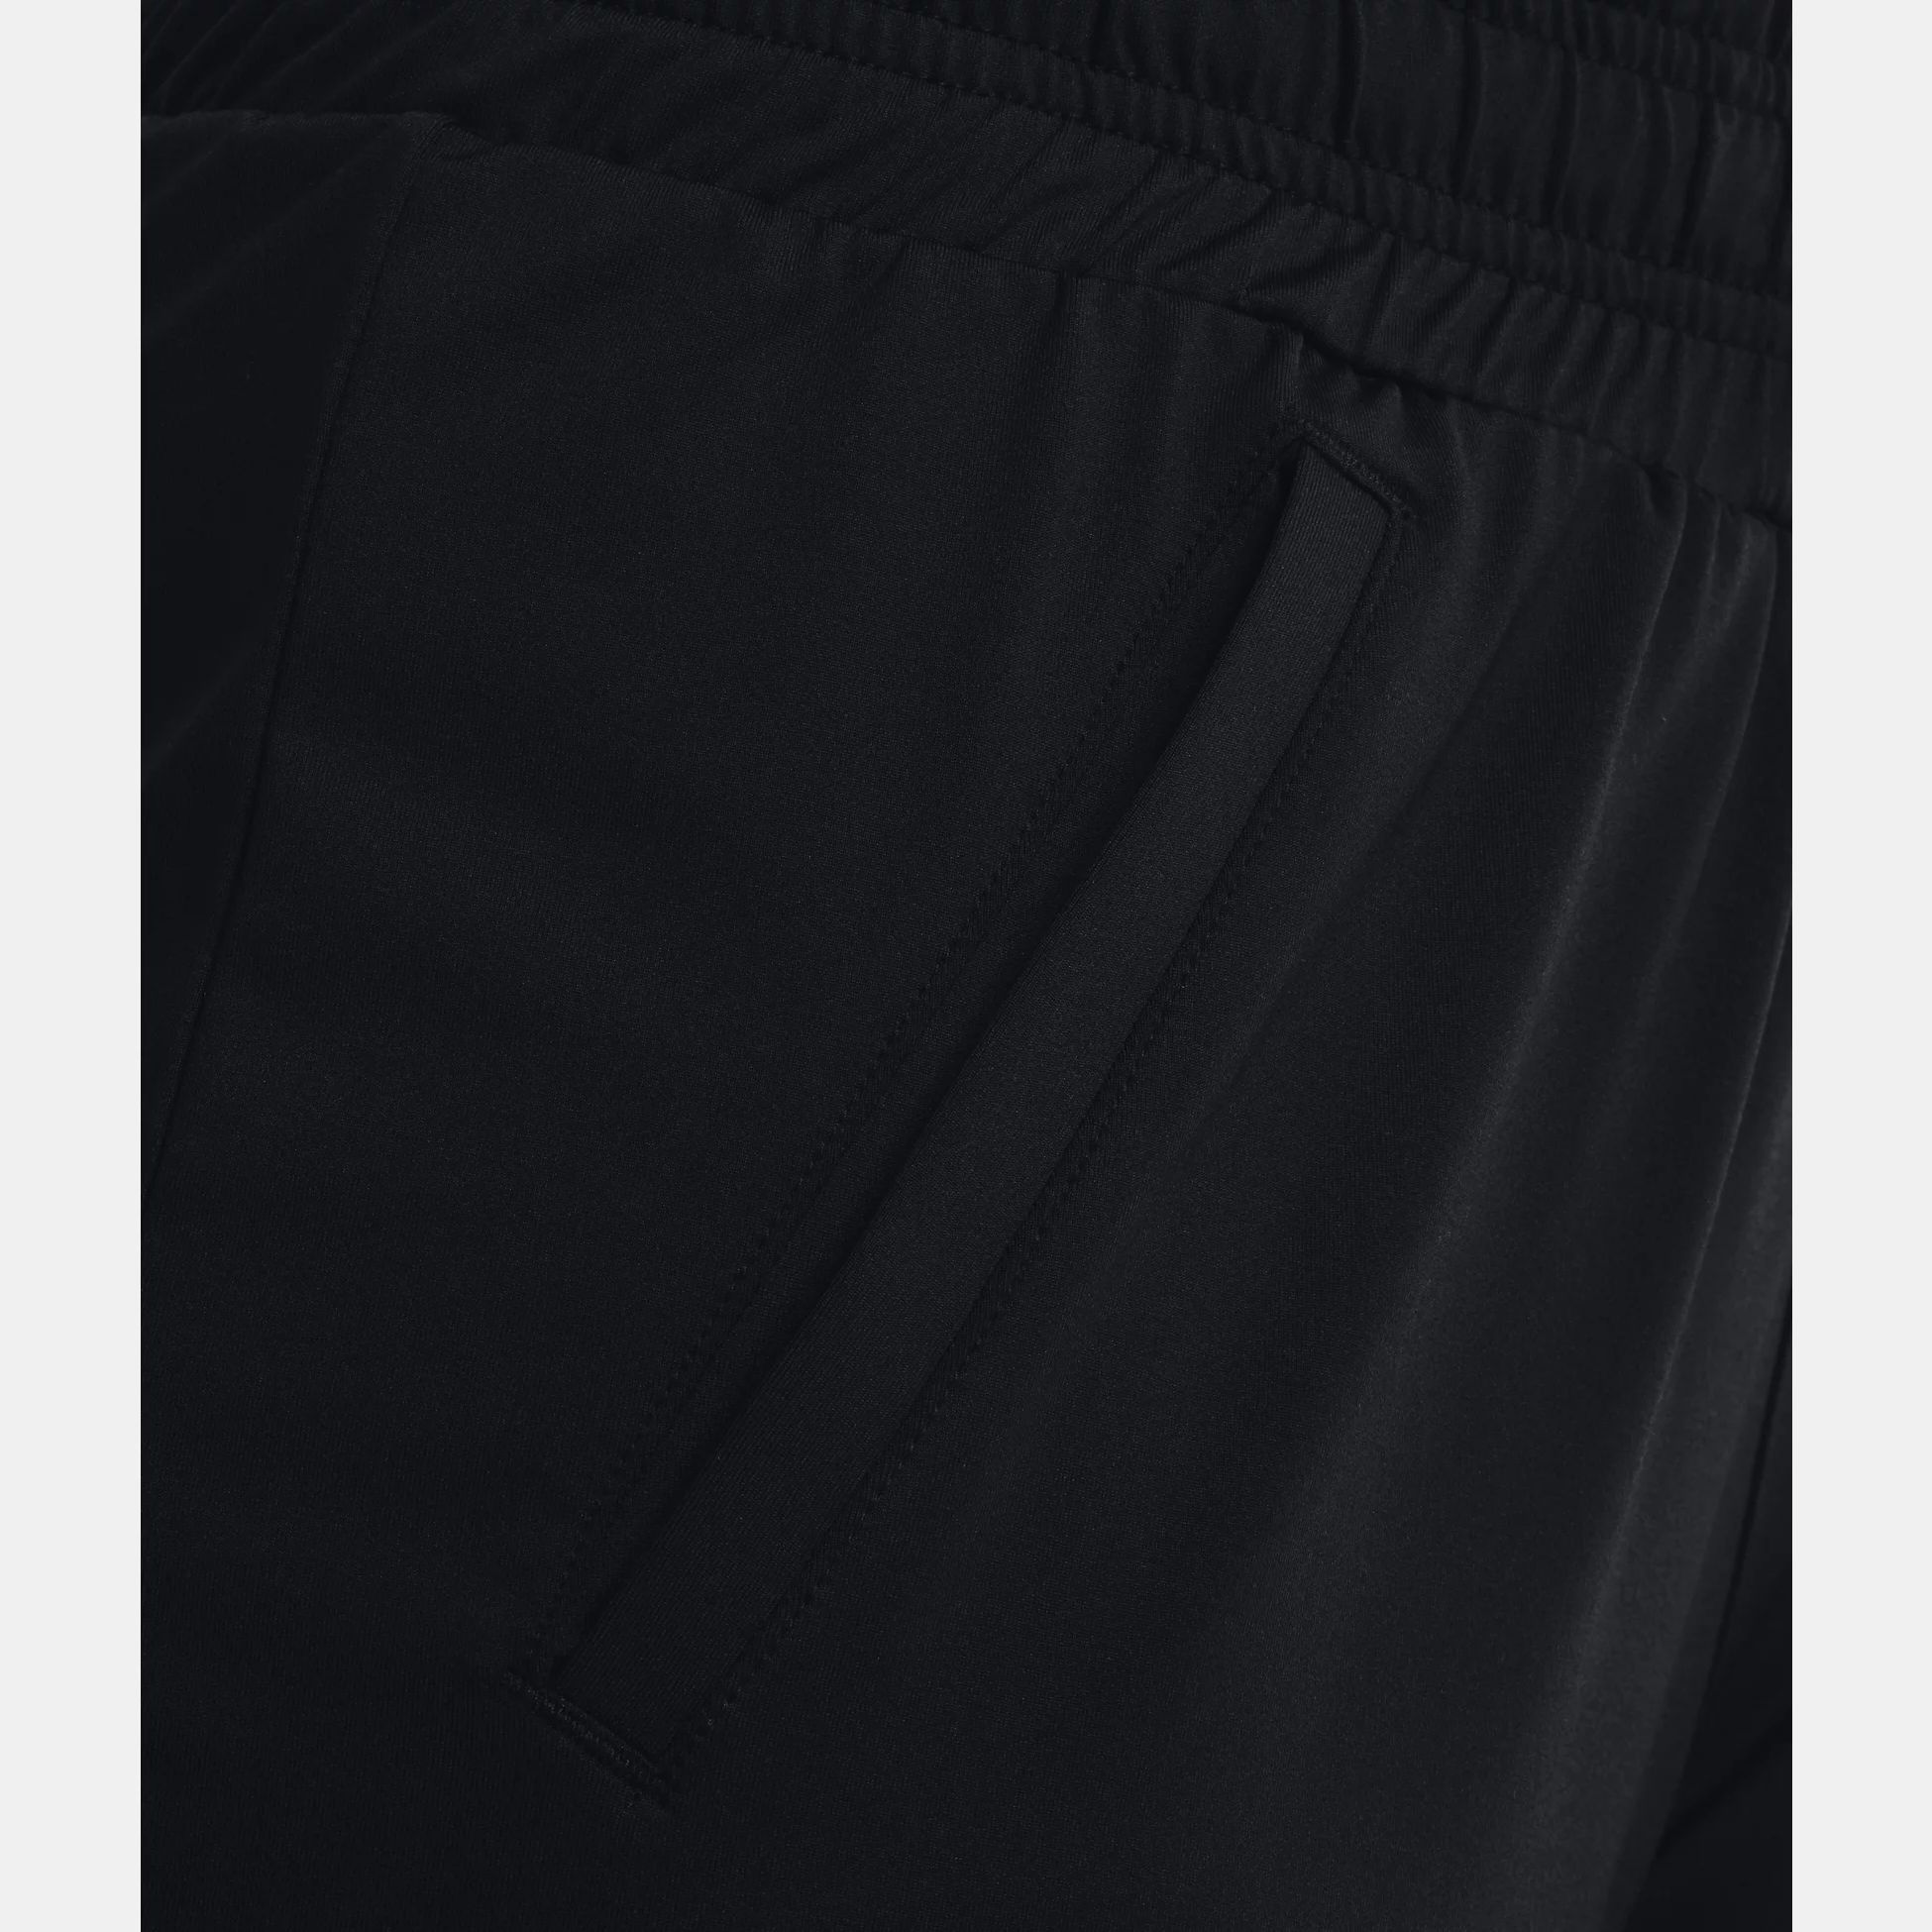 Pantaloni Lungi -  under armour HeatGear Pants